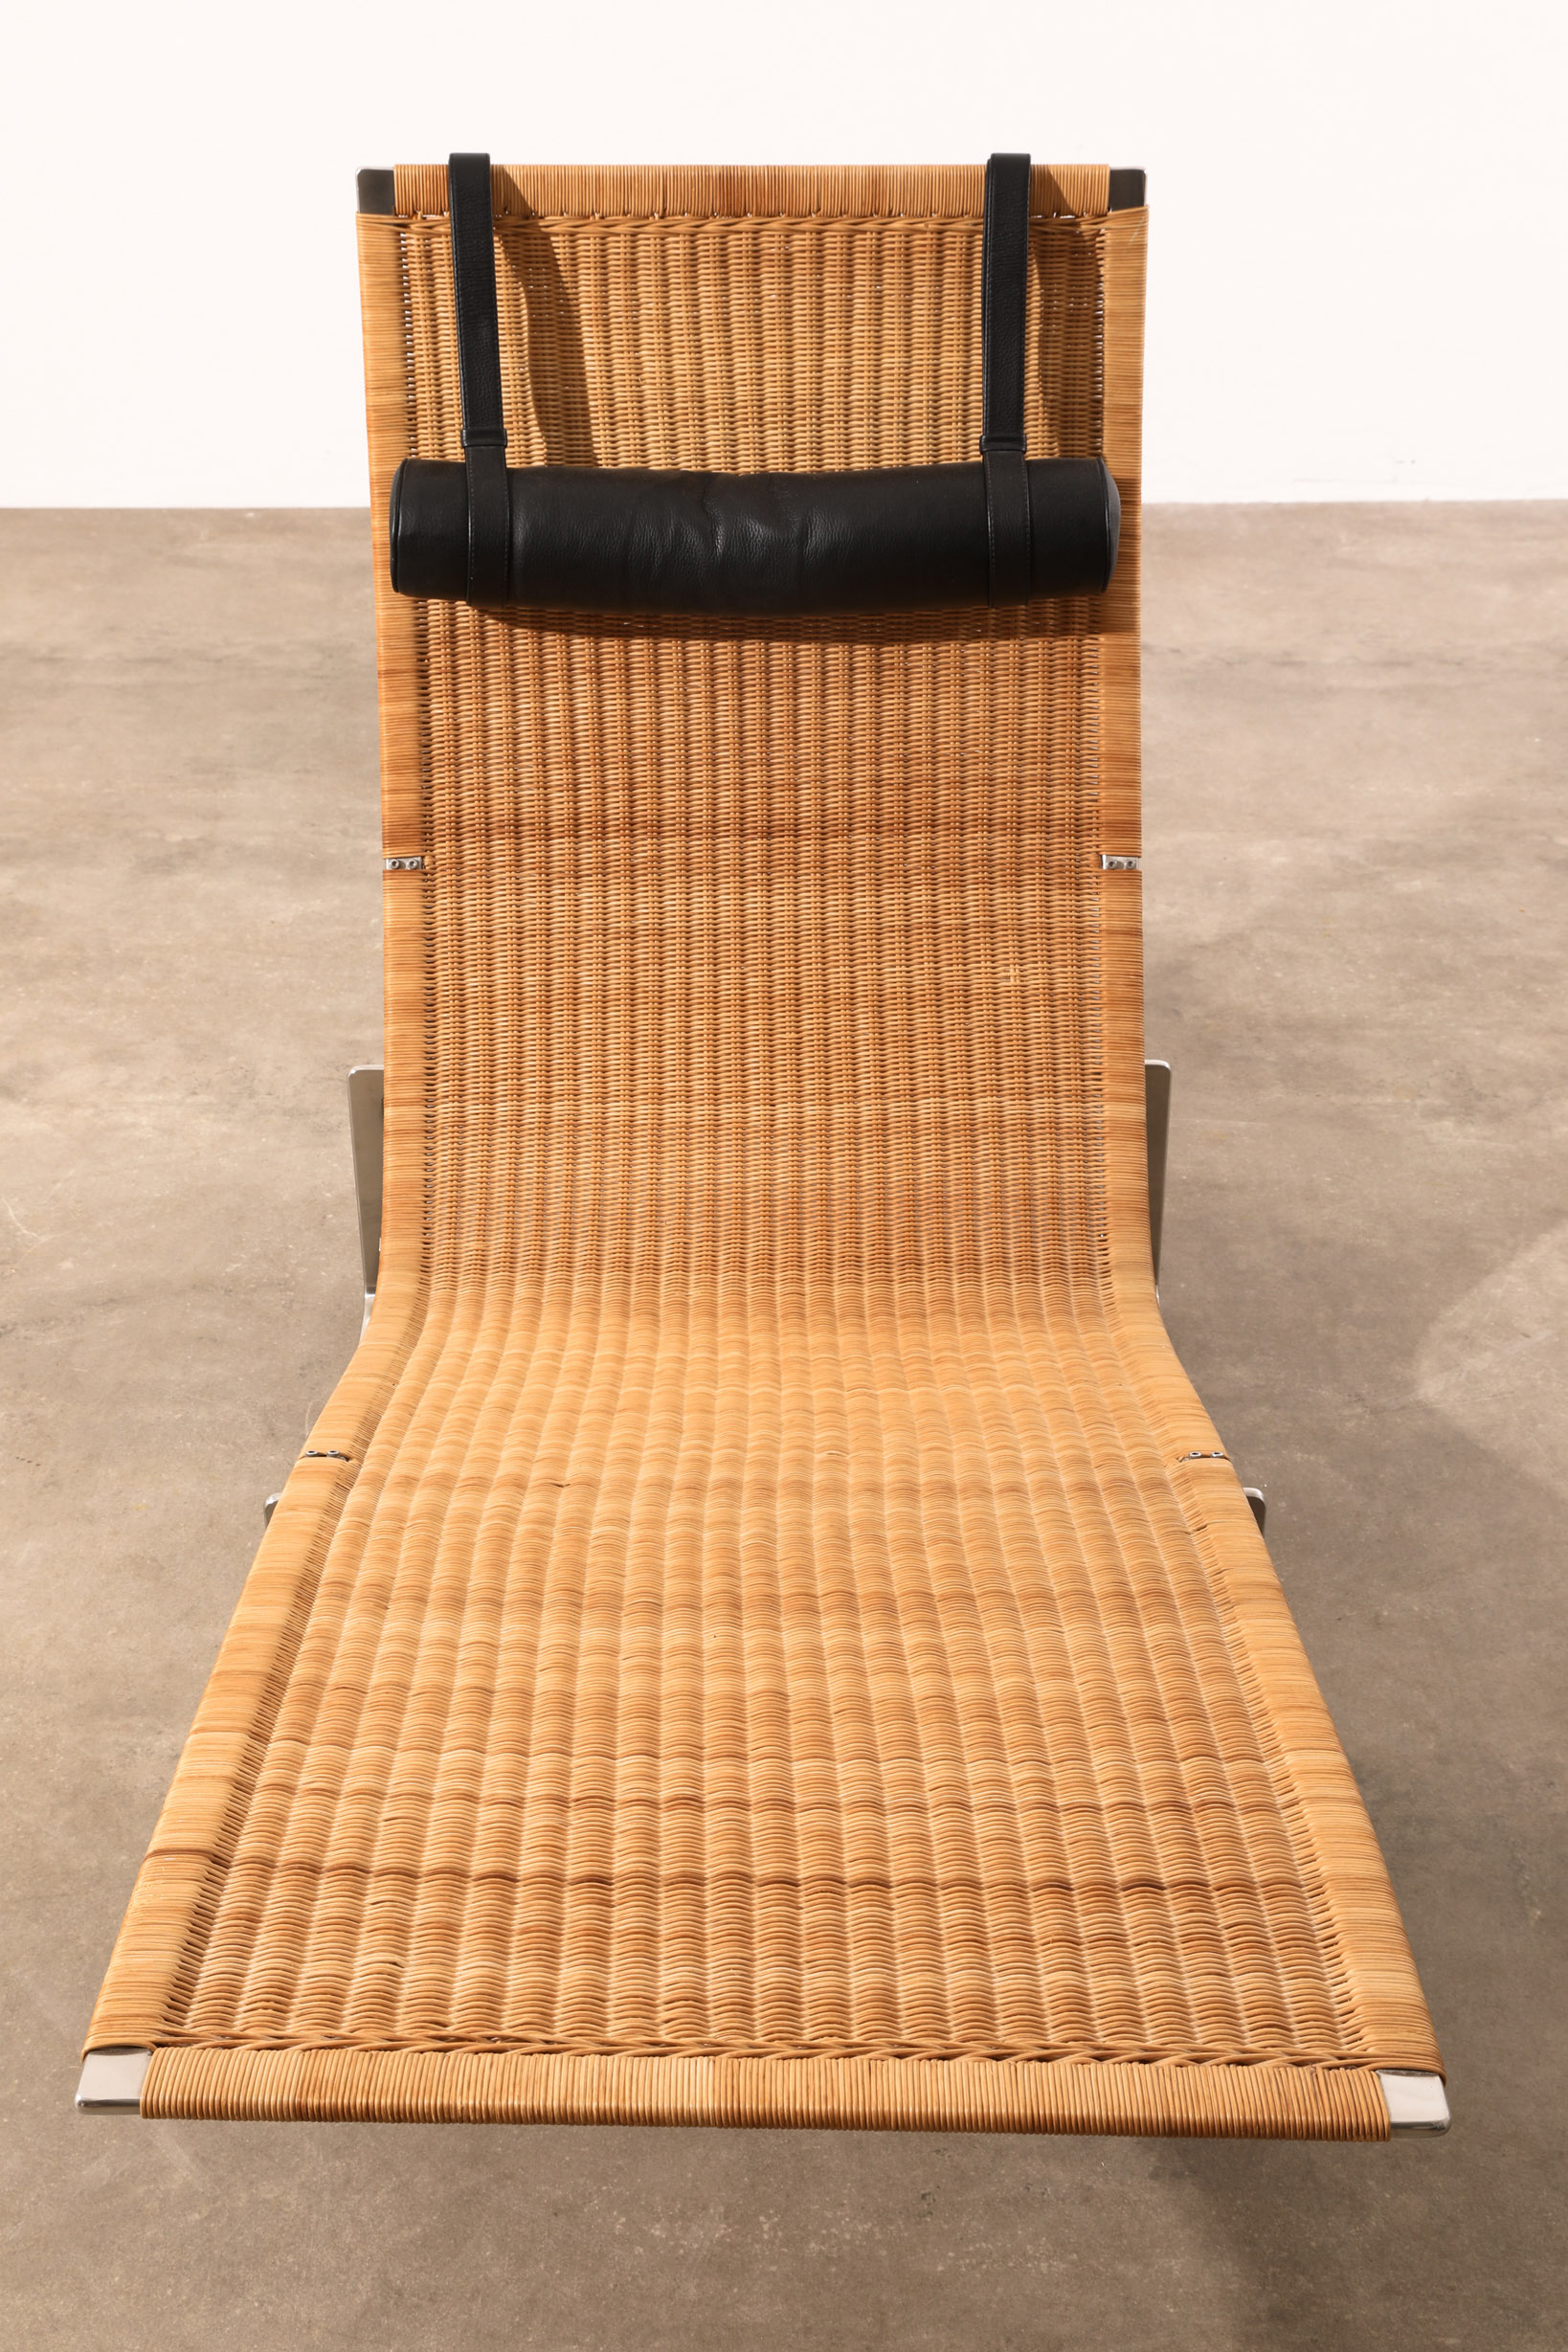 Poul Kjaerholm, Fritz Hansen, Lounger / chaise longue, model PK 24 - Image 2 of 6